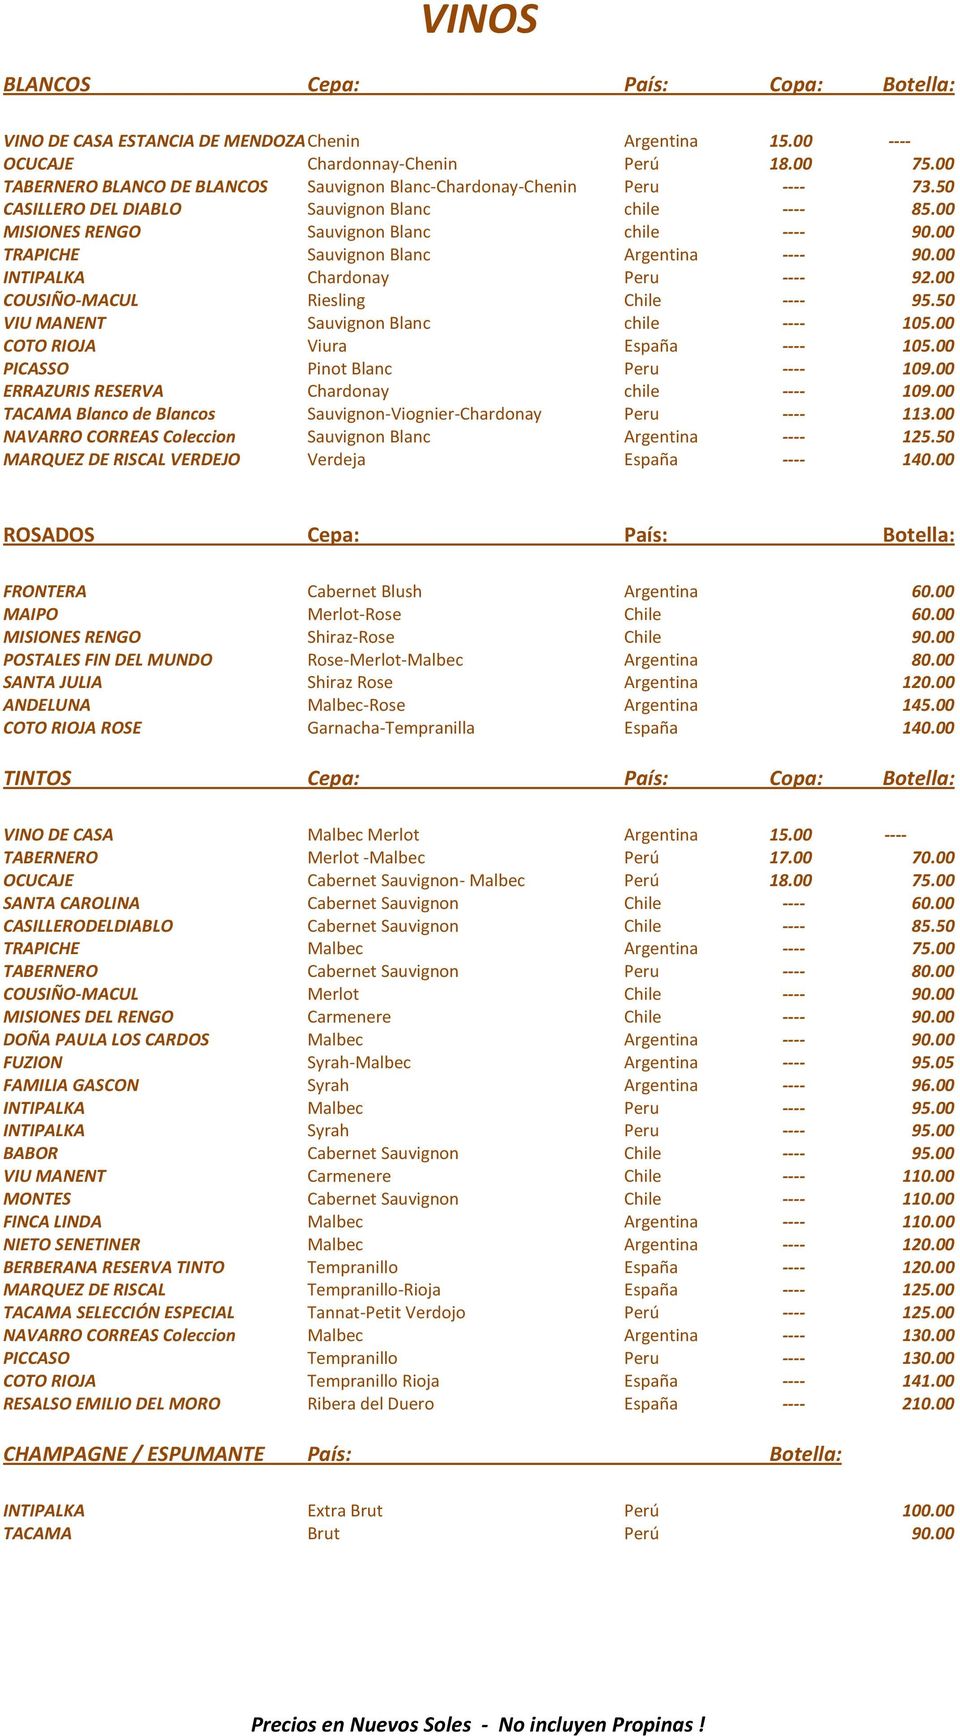 00 TRAPICHE Sauvignon Blanc Argentina ---- 90.00 INTIPALKA Chardonay Peru ---- 92.00 COUSIÑO-MACUL Riesling Chile ---- 95.50 VIU MANENT Sauvignon Blanc chile ---- 105.